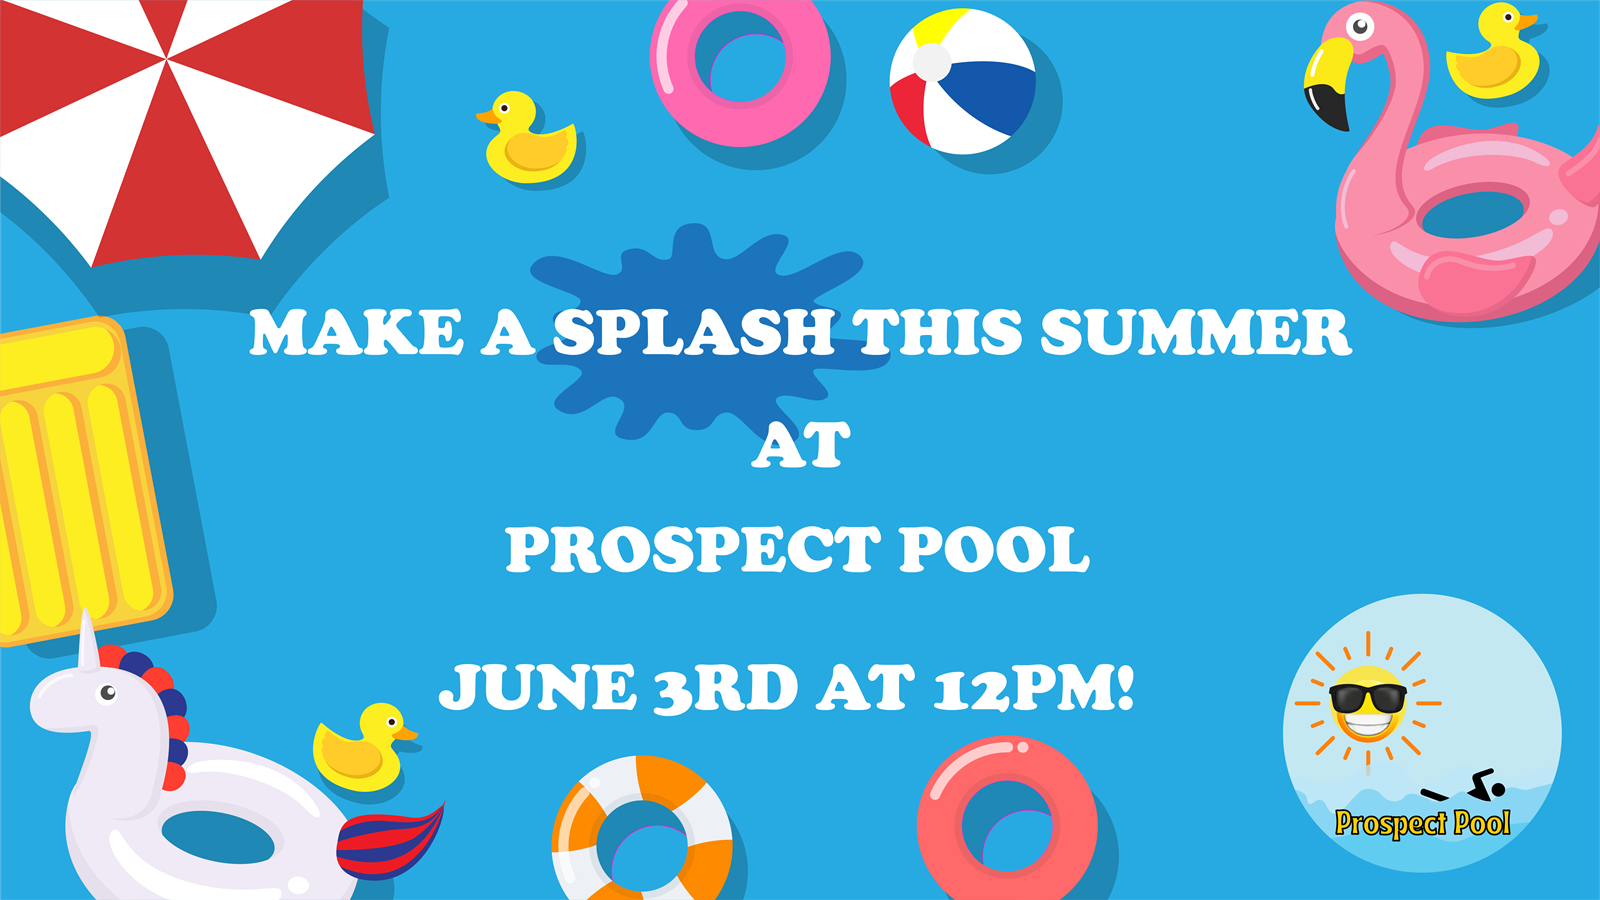 Prospect Pool Info